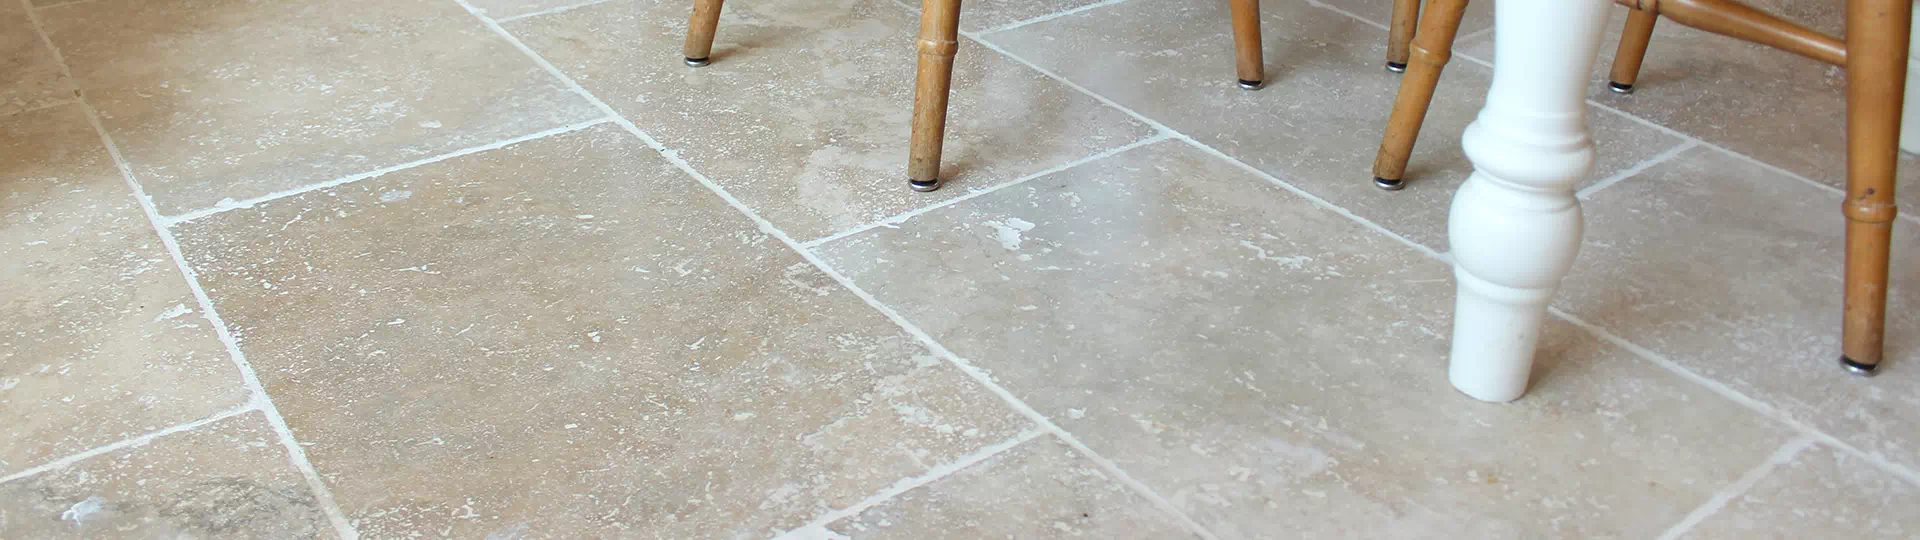 How To Clean Travertine Floors Simple, Travertine Tile Maintenance